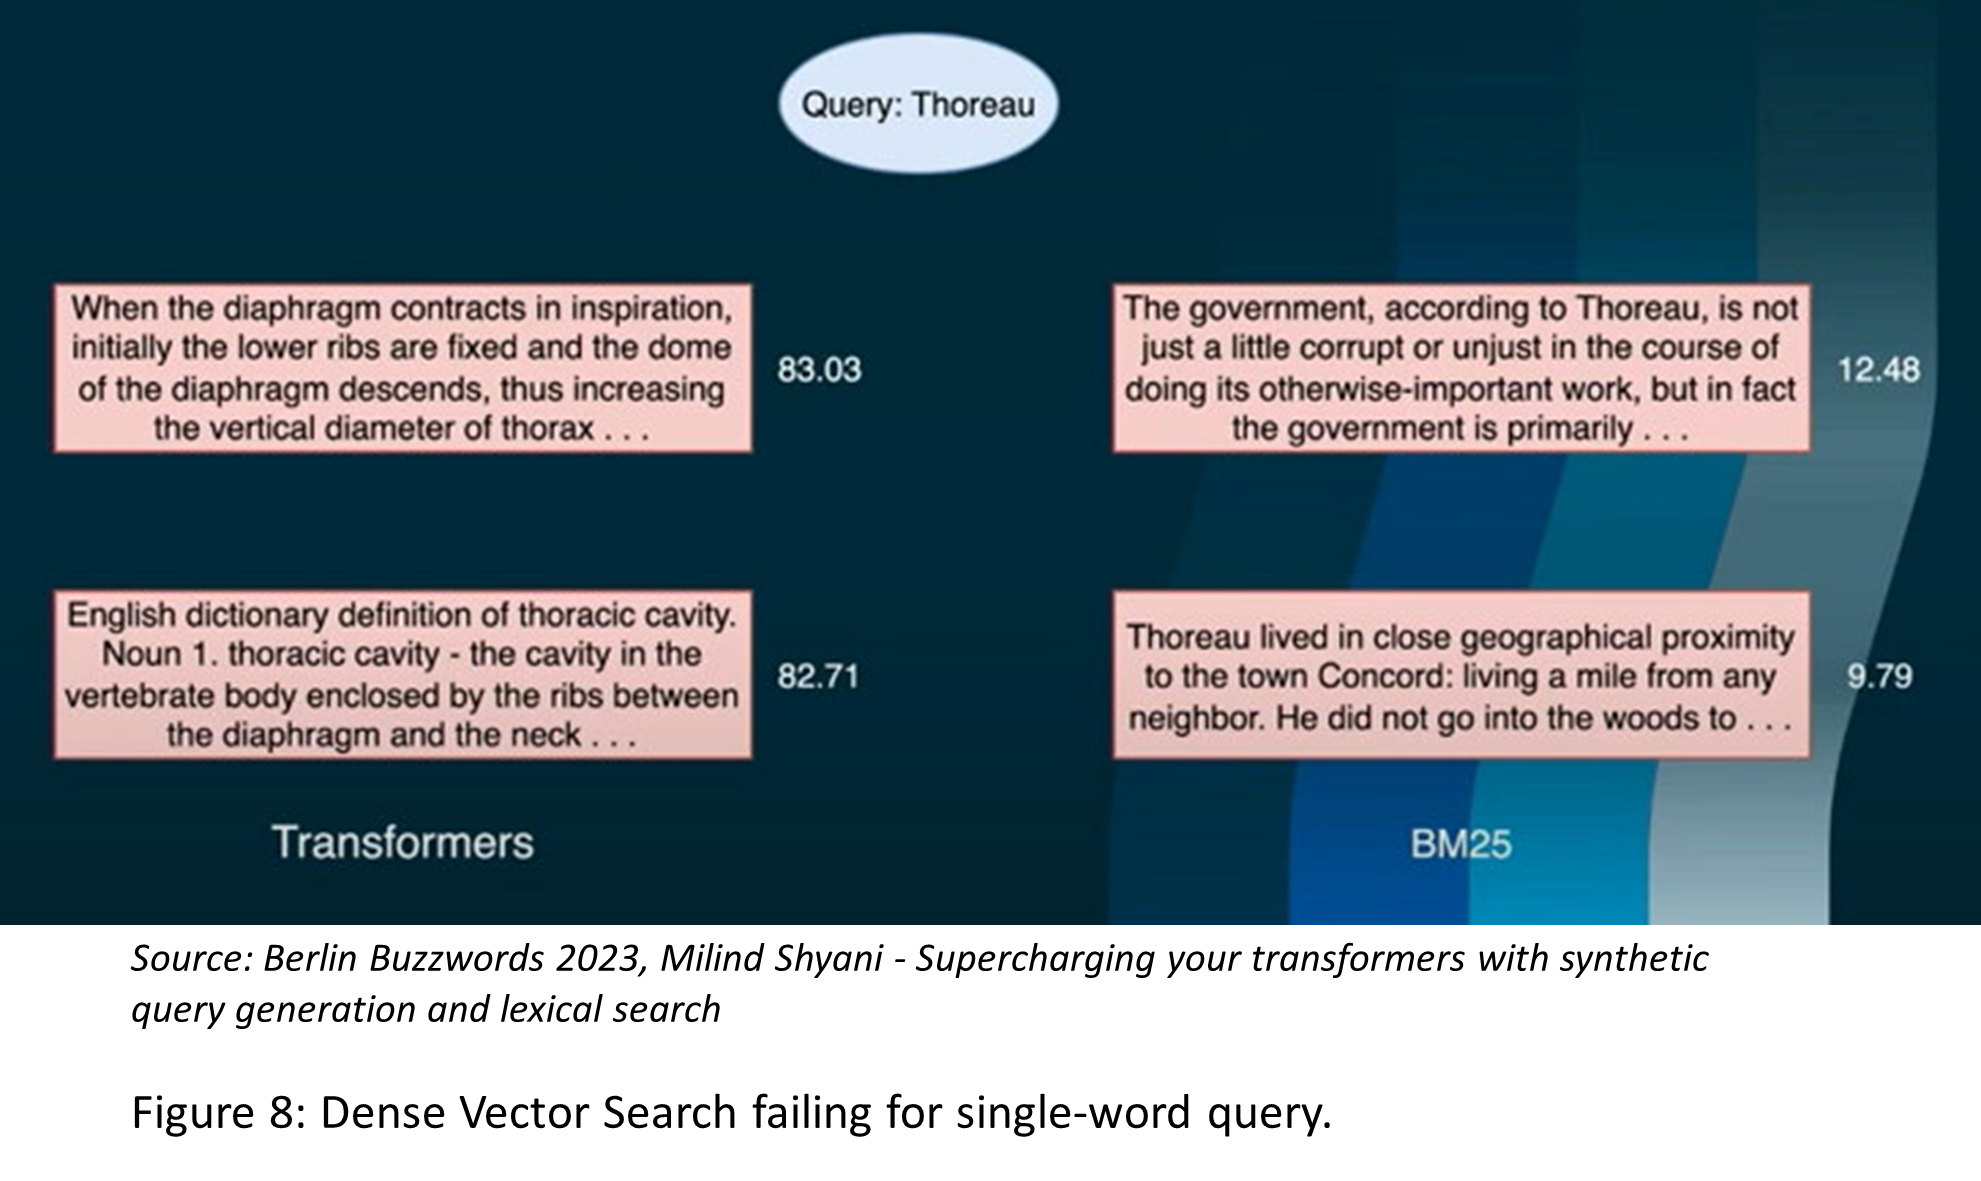 Dense Vector Search failing for single-word query